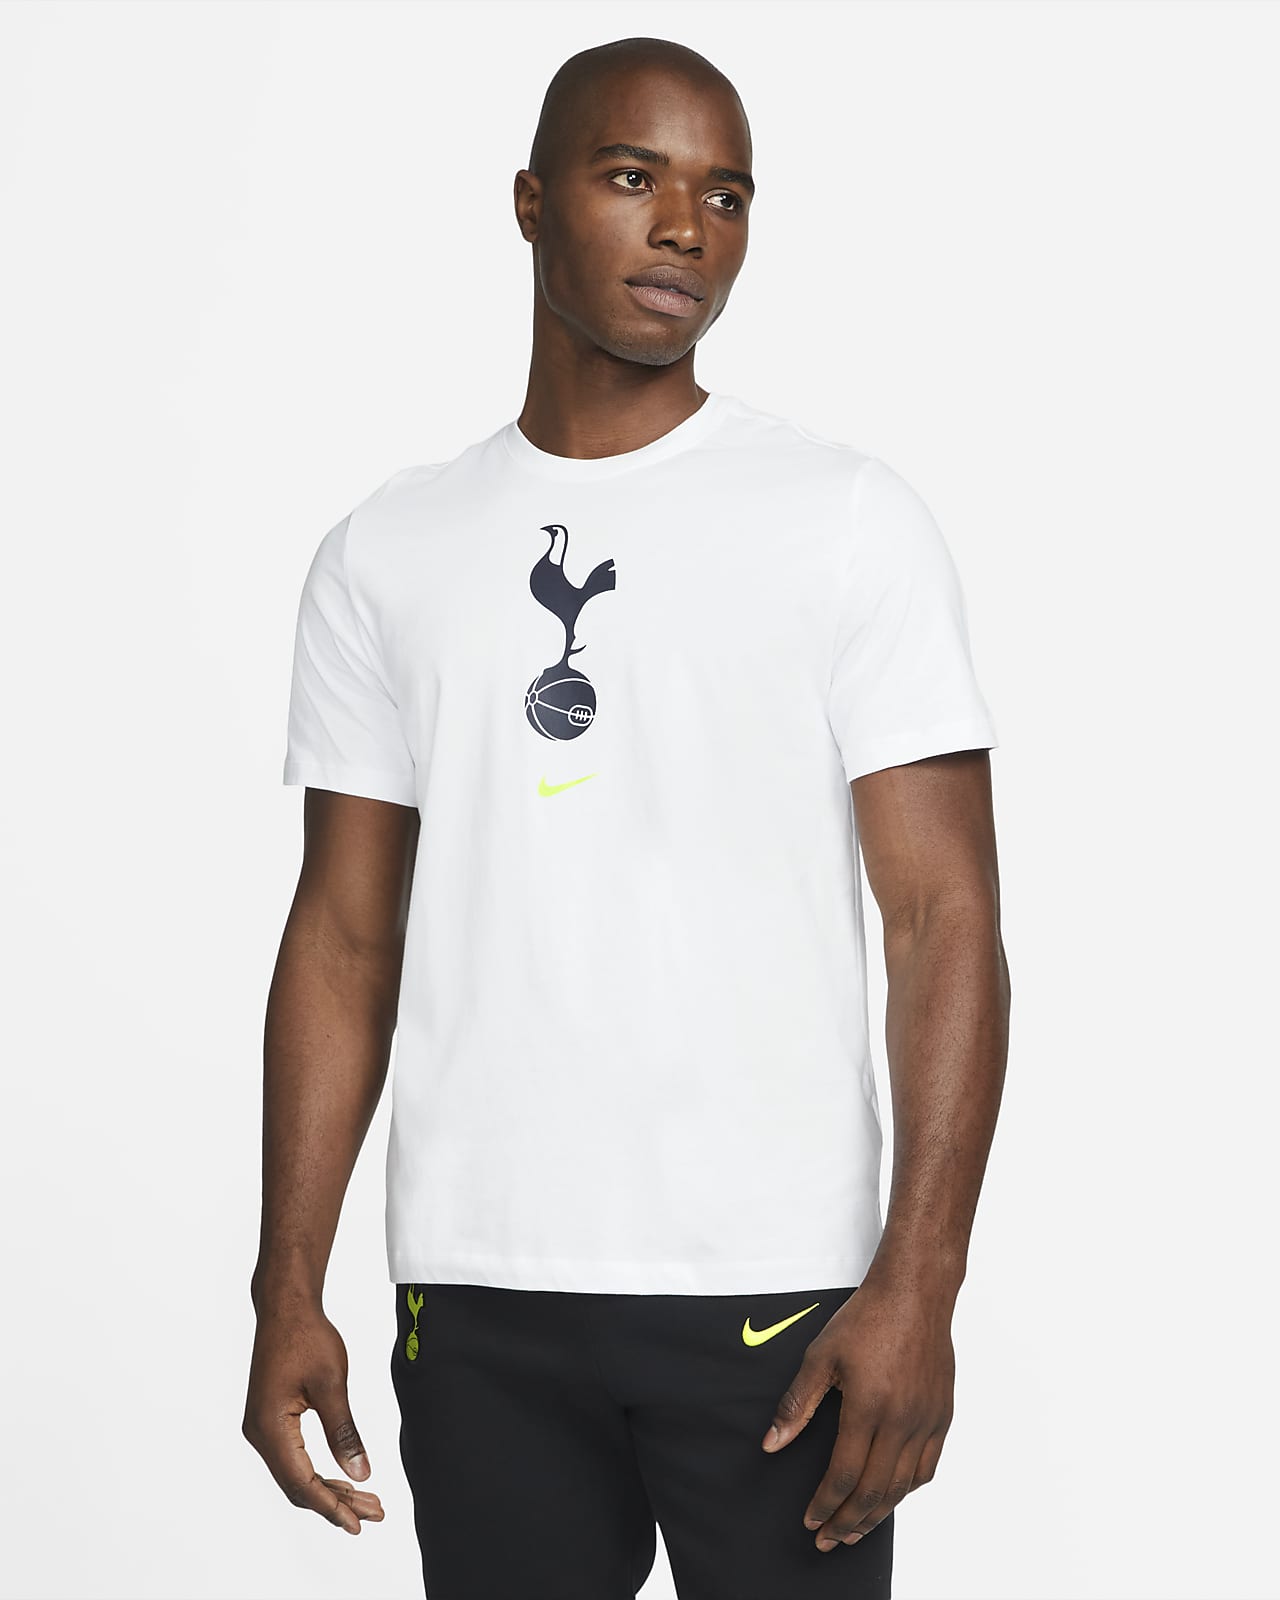 Personalized Tottenham hotspur mens shirt - Unlimited creativity, your ...